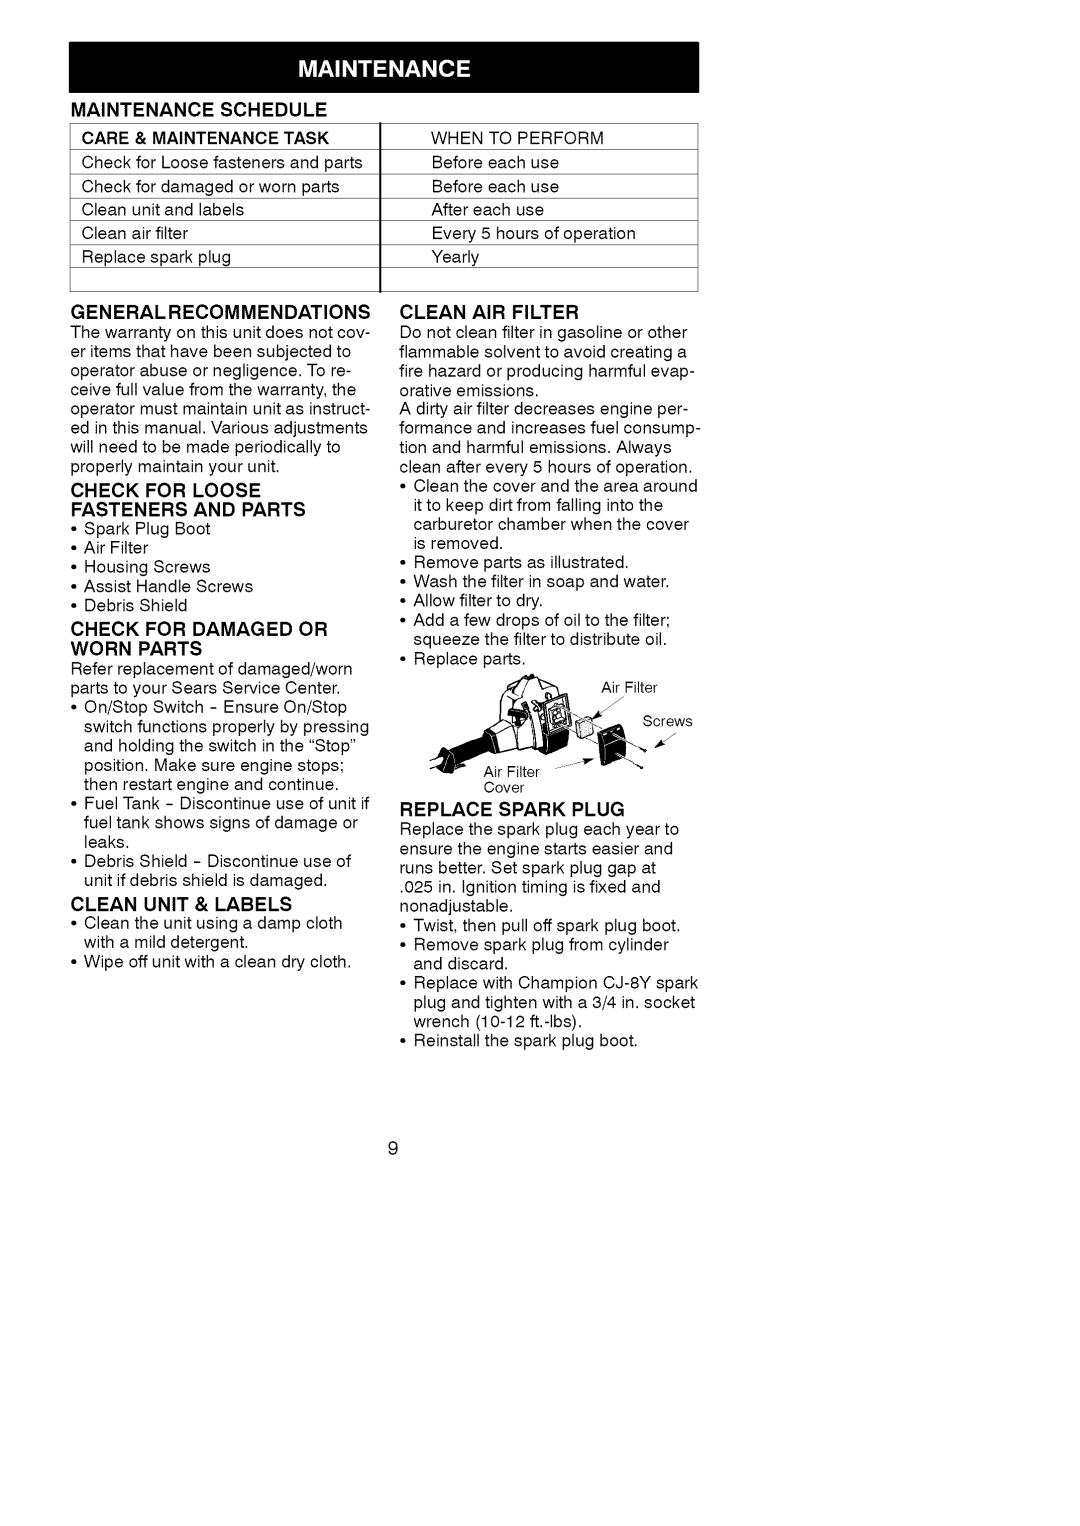 Craftsman 358.79821 manual Maintenanceschedule, General Recommendations, Clean Air Filter, Replace Spark Plug 